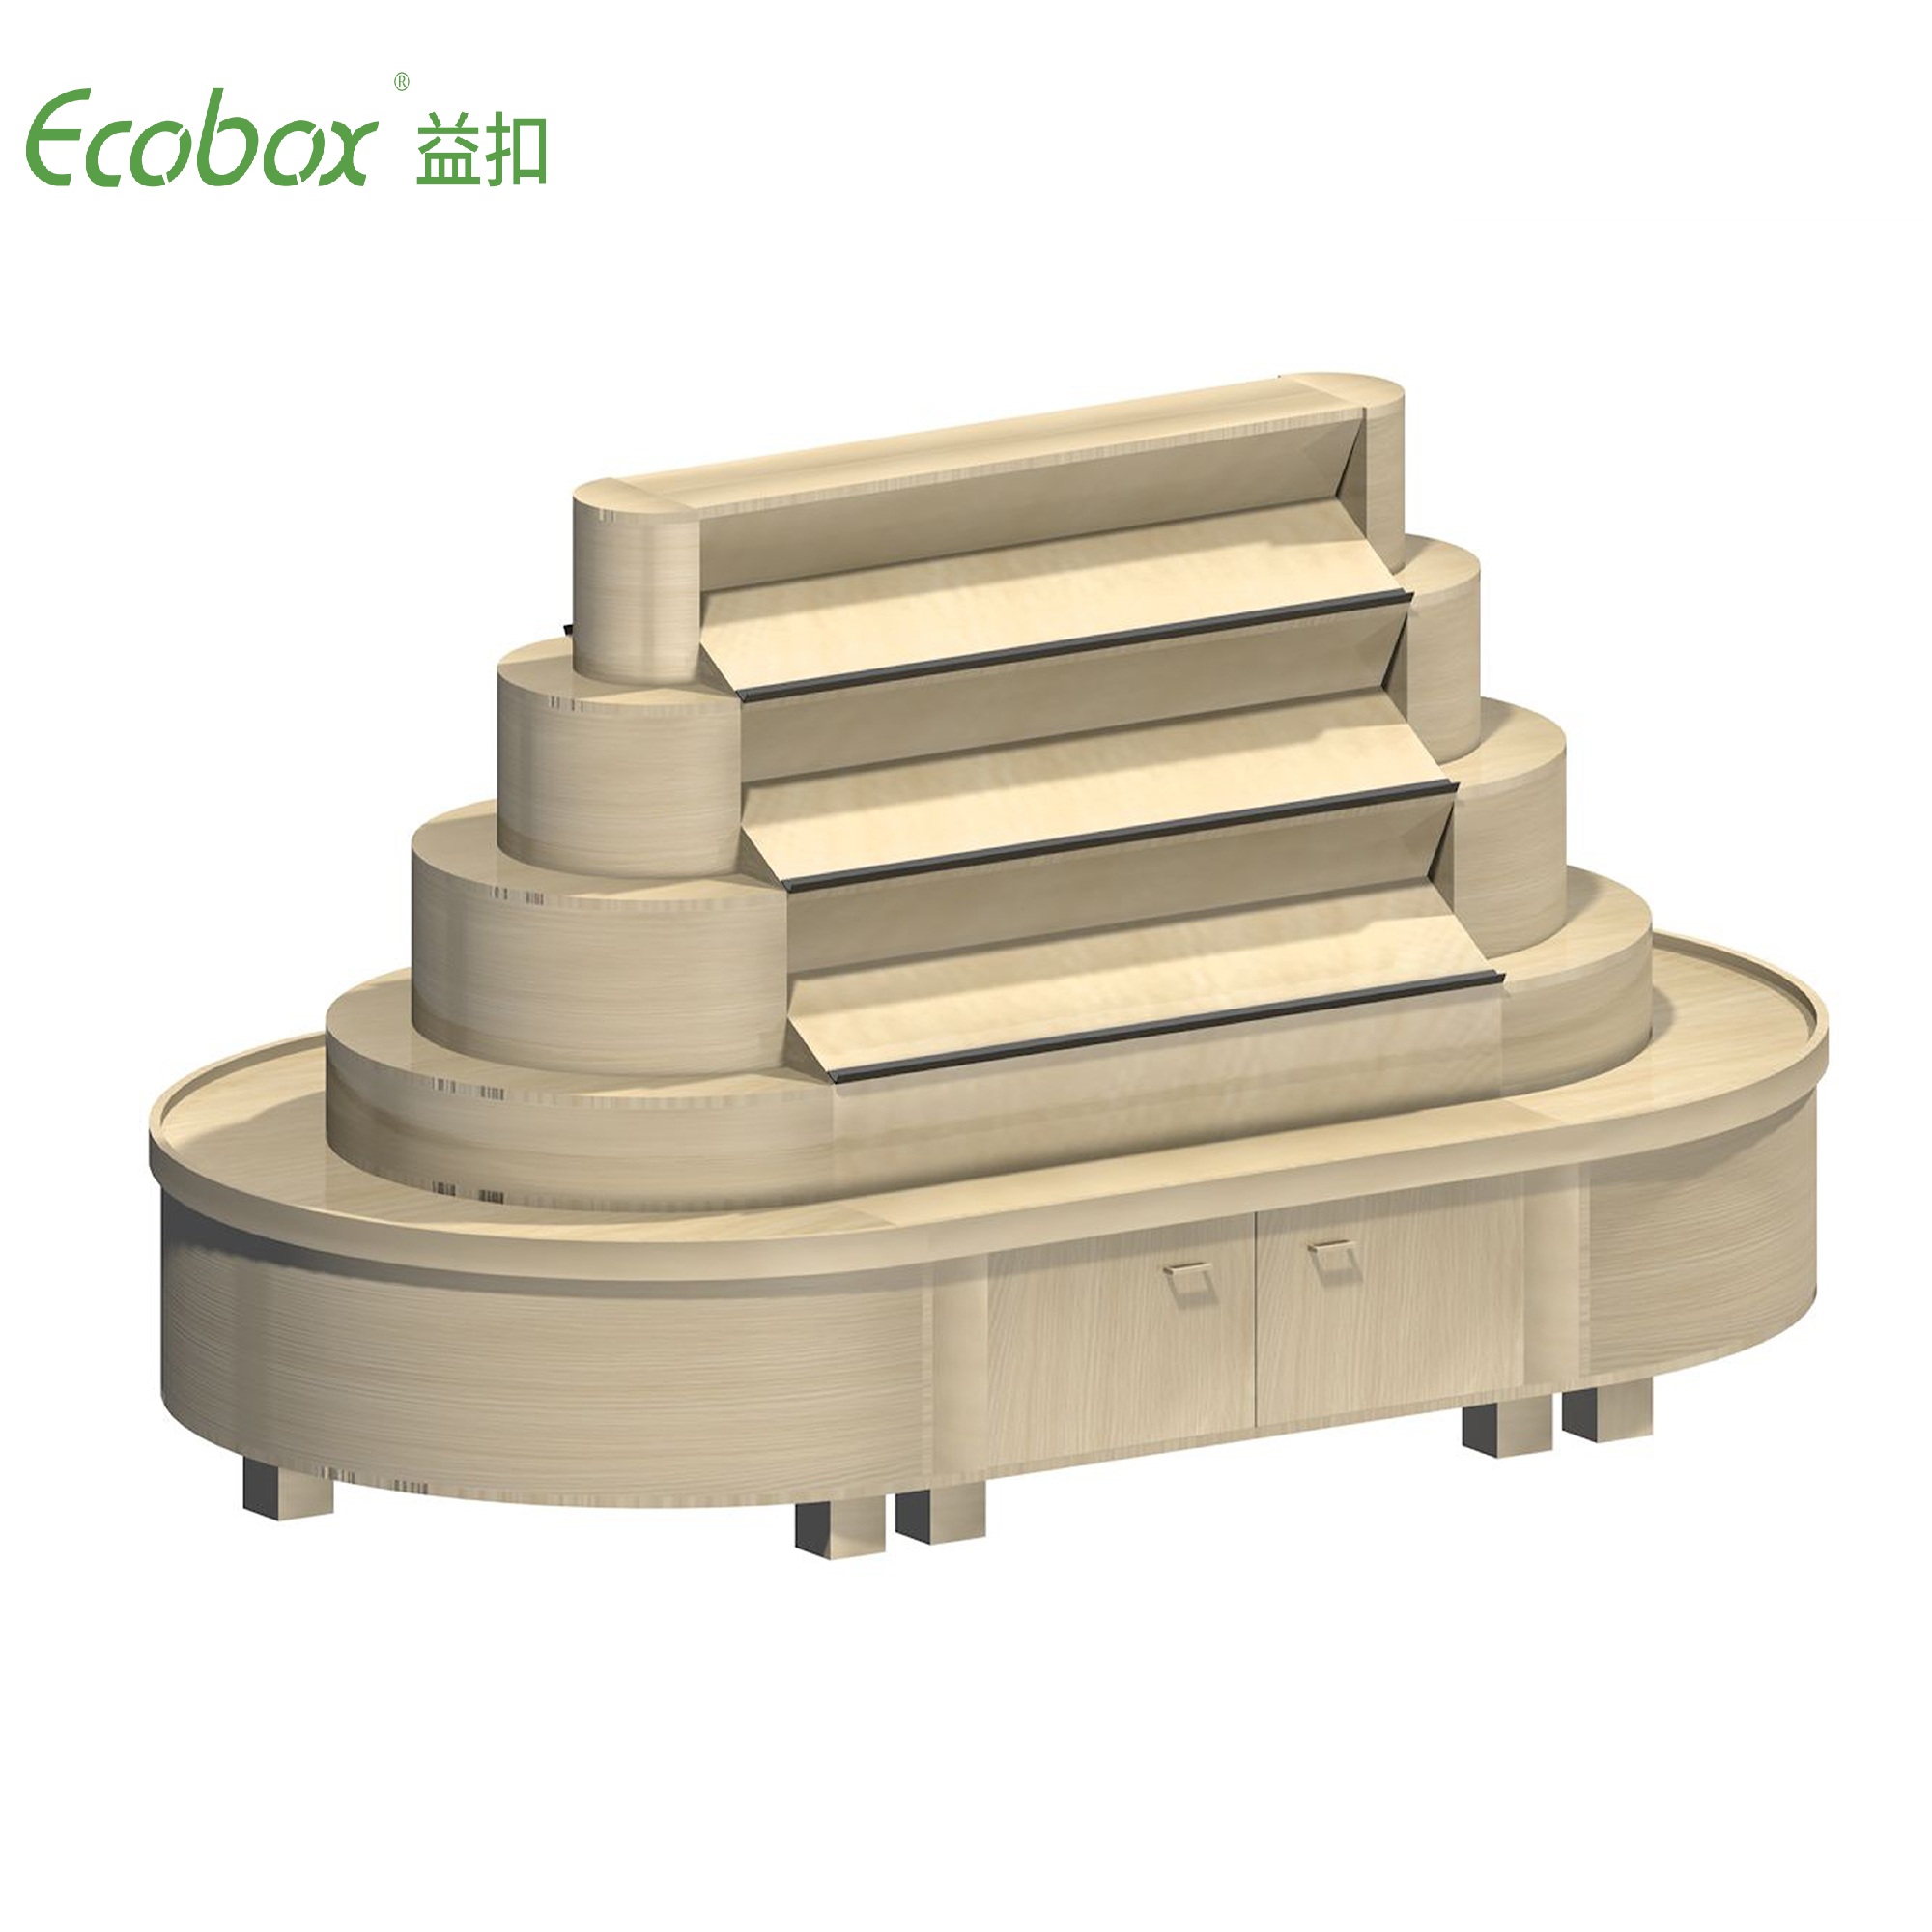 Estante redondo de la serie Ecobox G002 con exhibidores de alimentos a granel de supermercado de contenedores a granel Ecobox